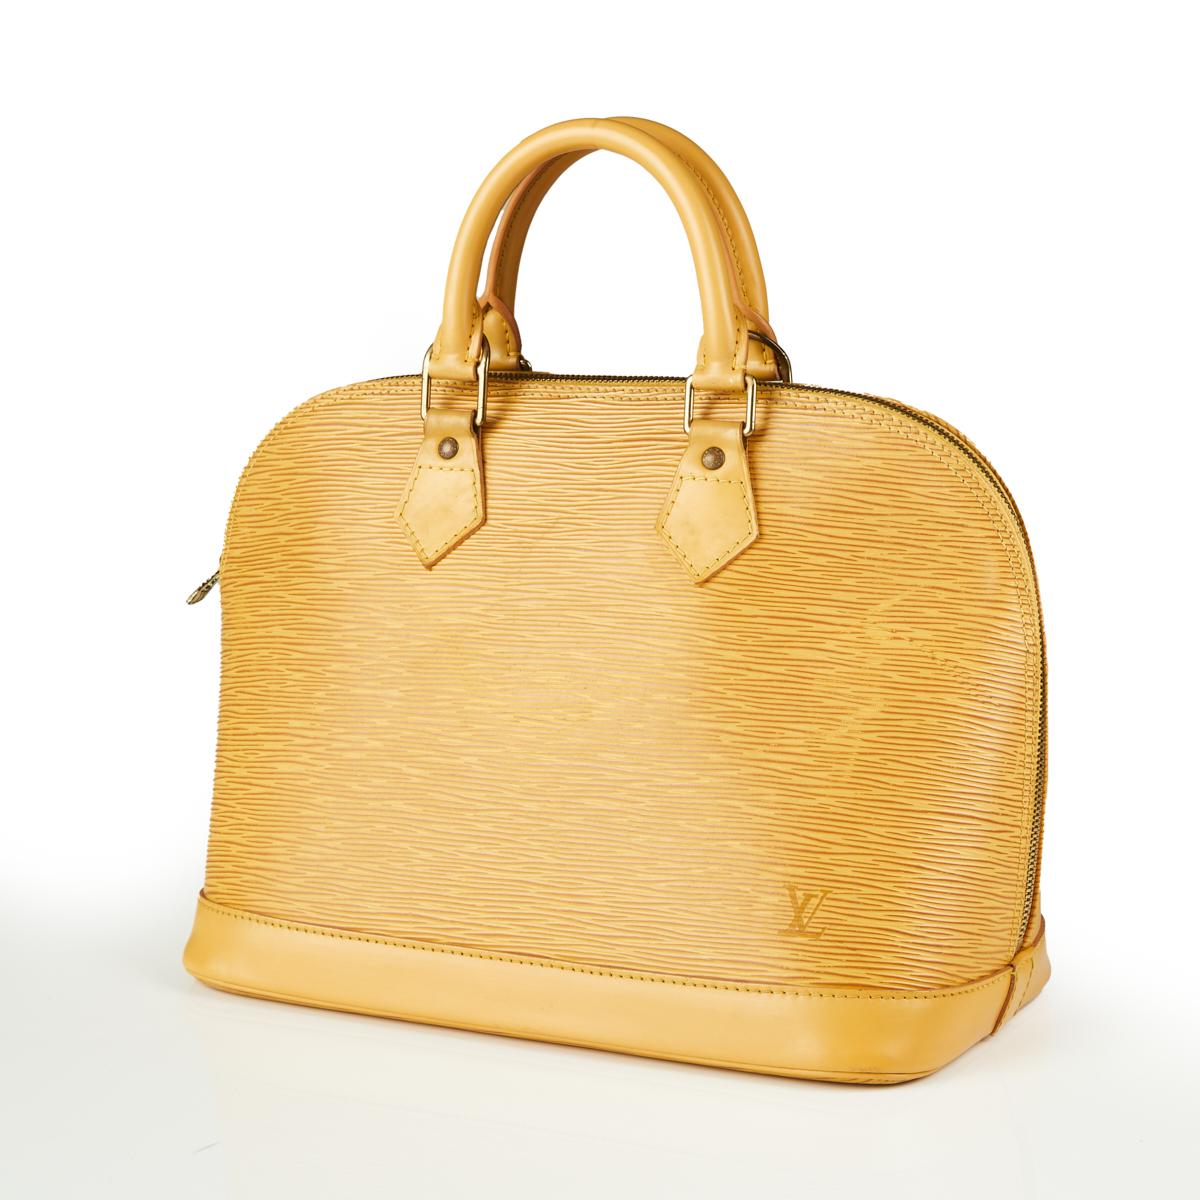 Sold at Auction: Louis Vuitton, Louis Vuitton Yellow Epi Leather